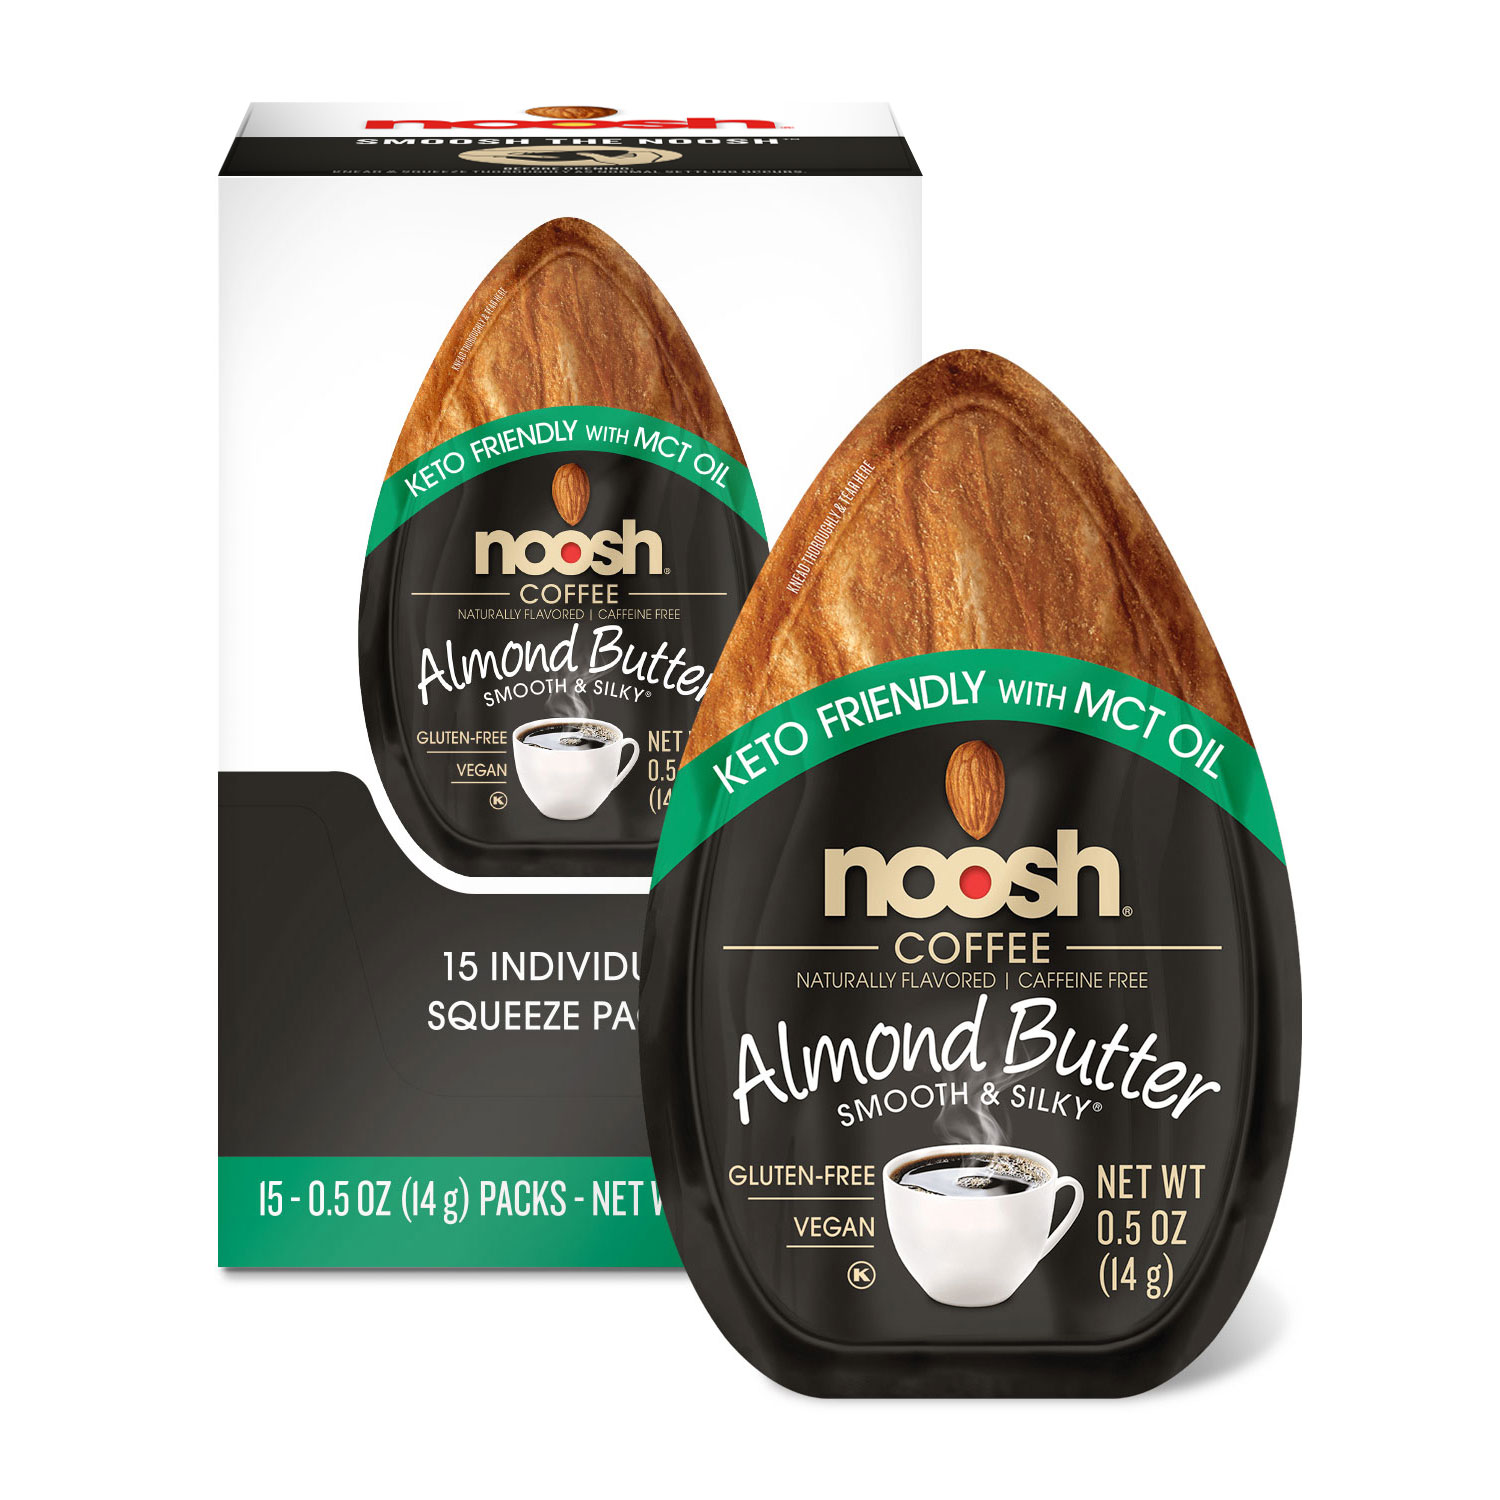 Noosh Keto Friendly Coffee Almond Butter